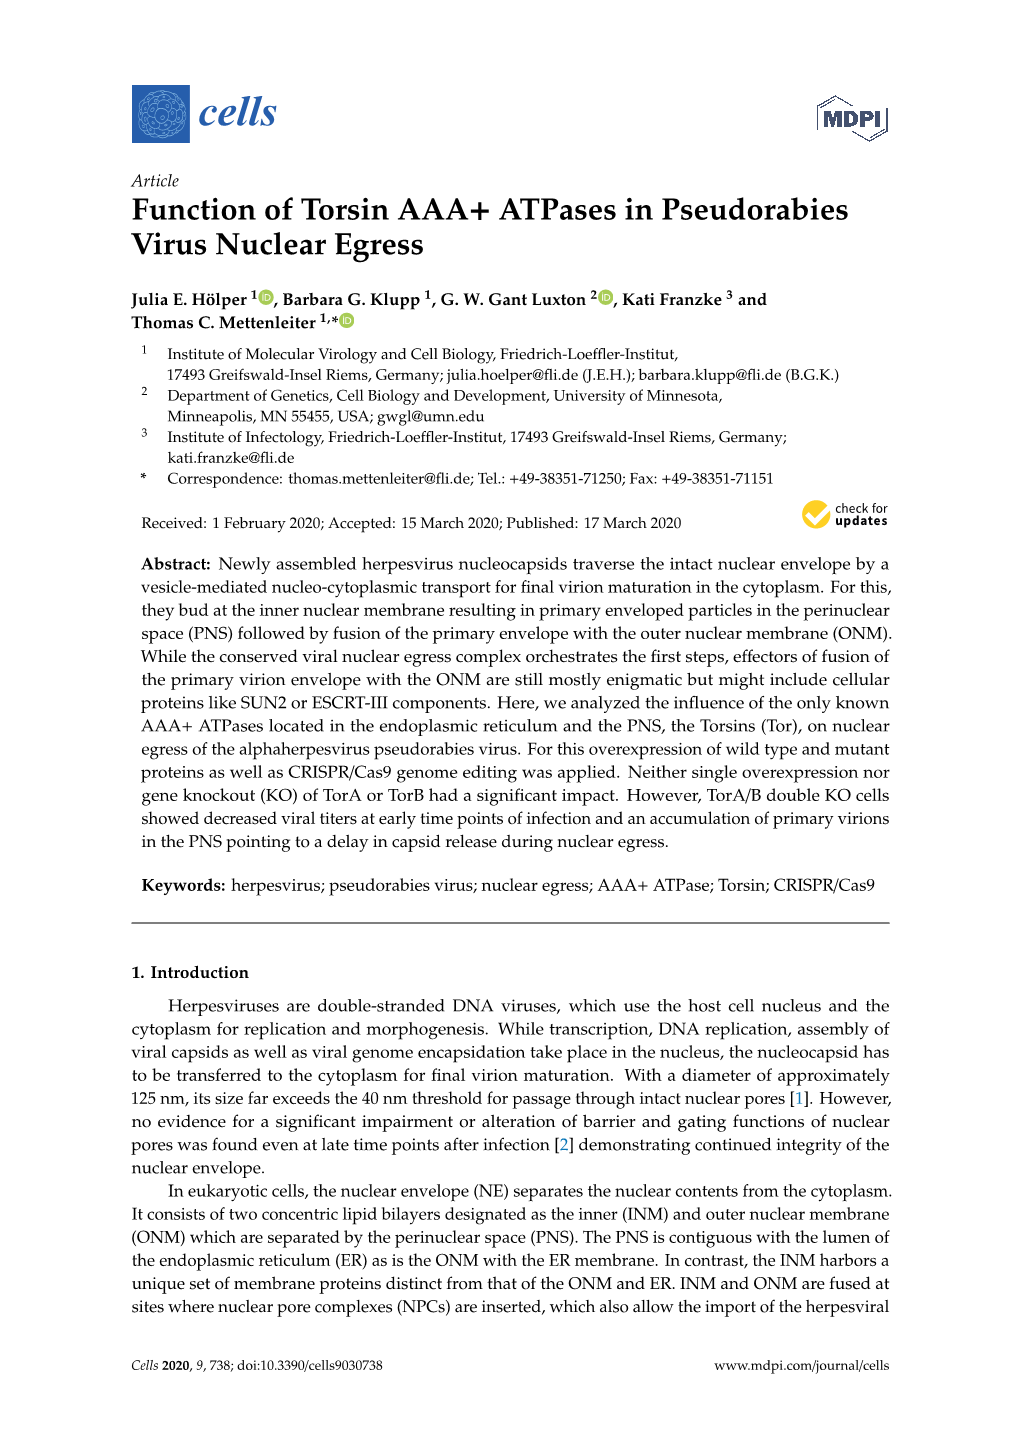 Function of Torsin AAA+ Atpases in Pseudorabies Virus Nuclear Egress